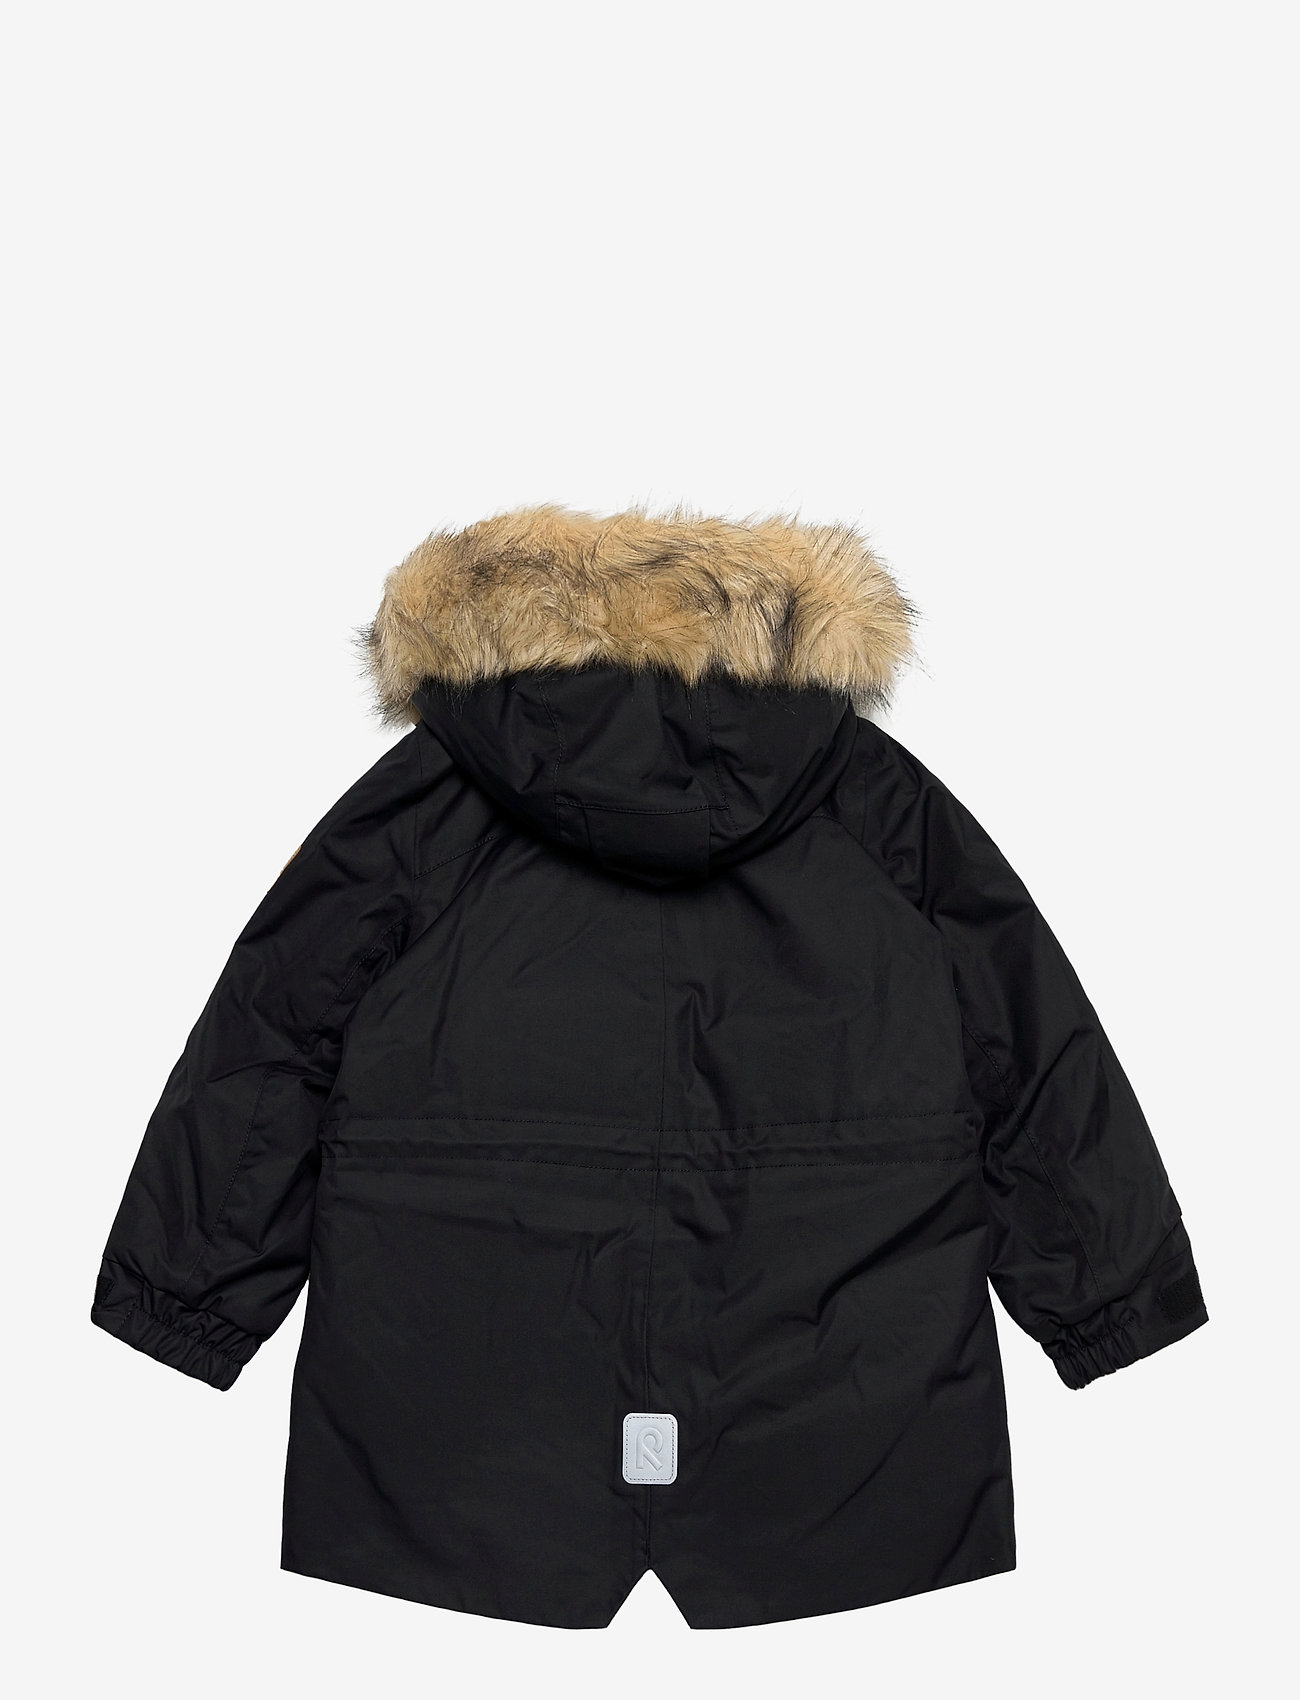 Reima - Reimatec winter jacket, Naapuri - insulated jackets - black - 1